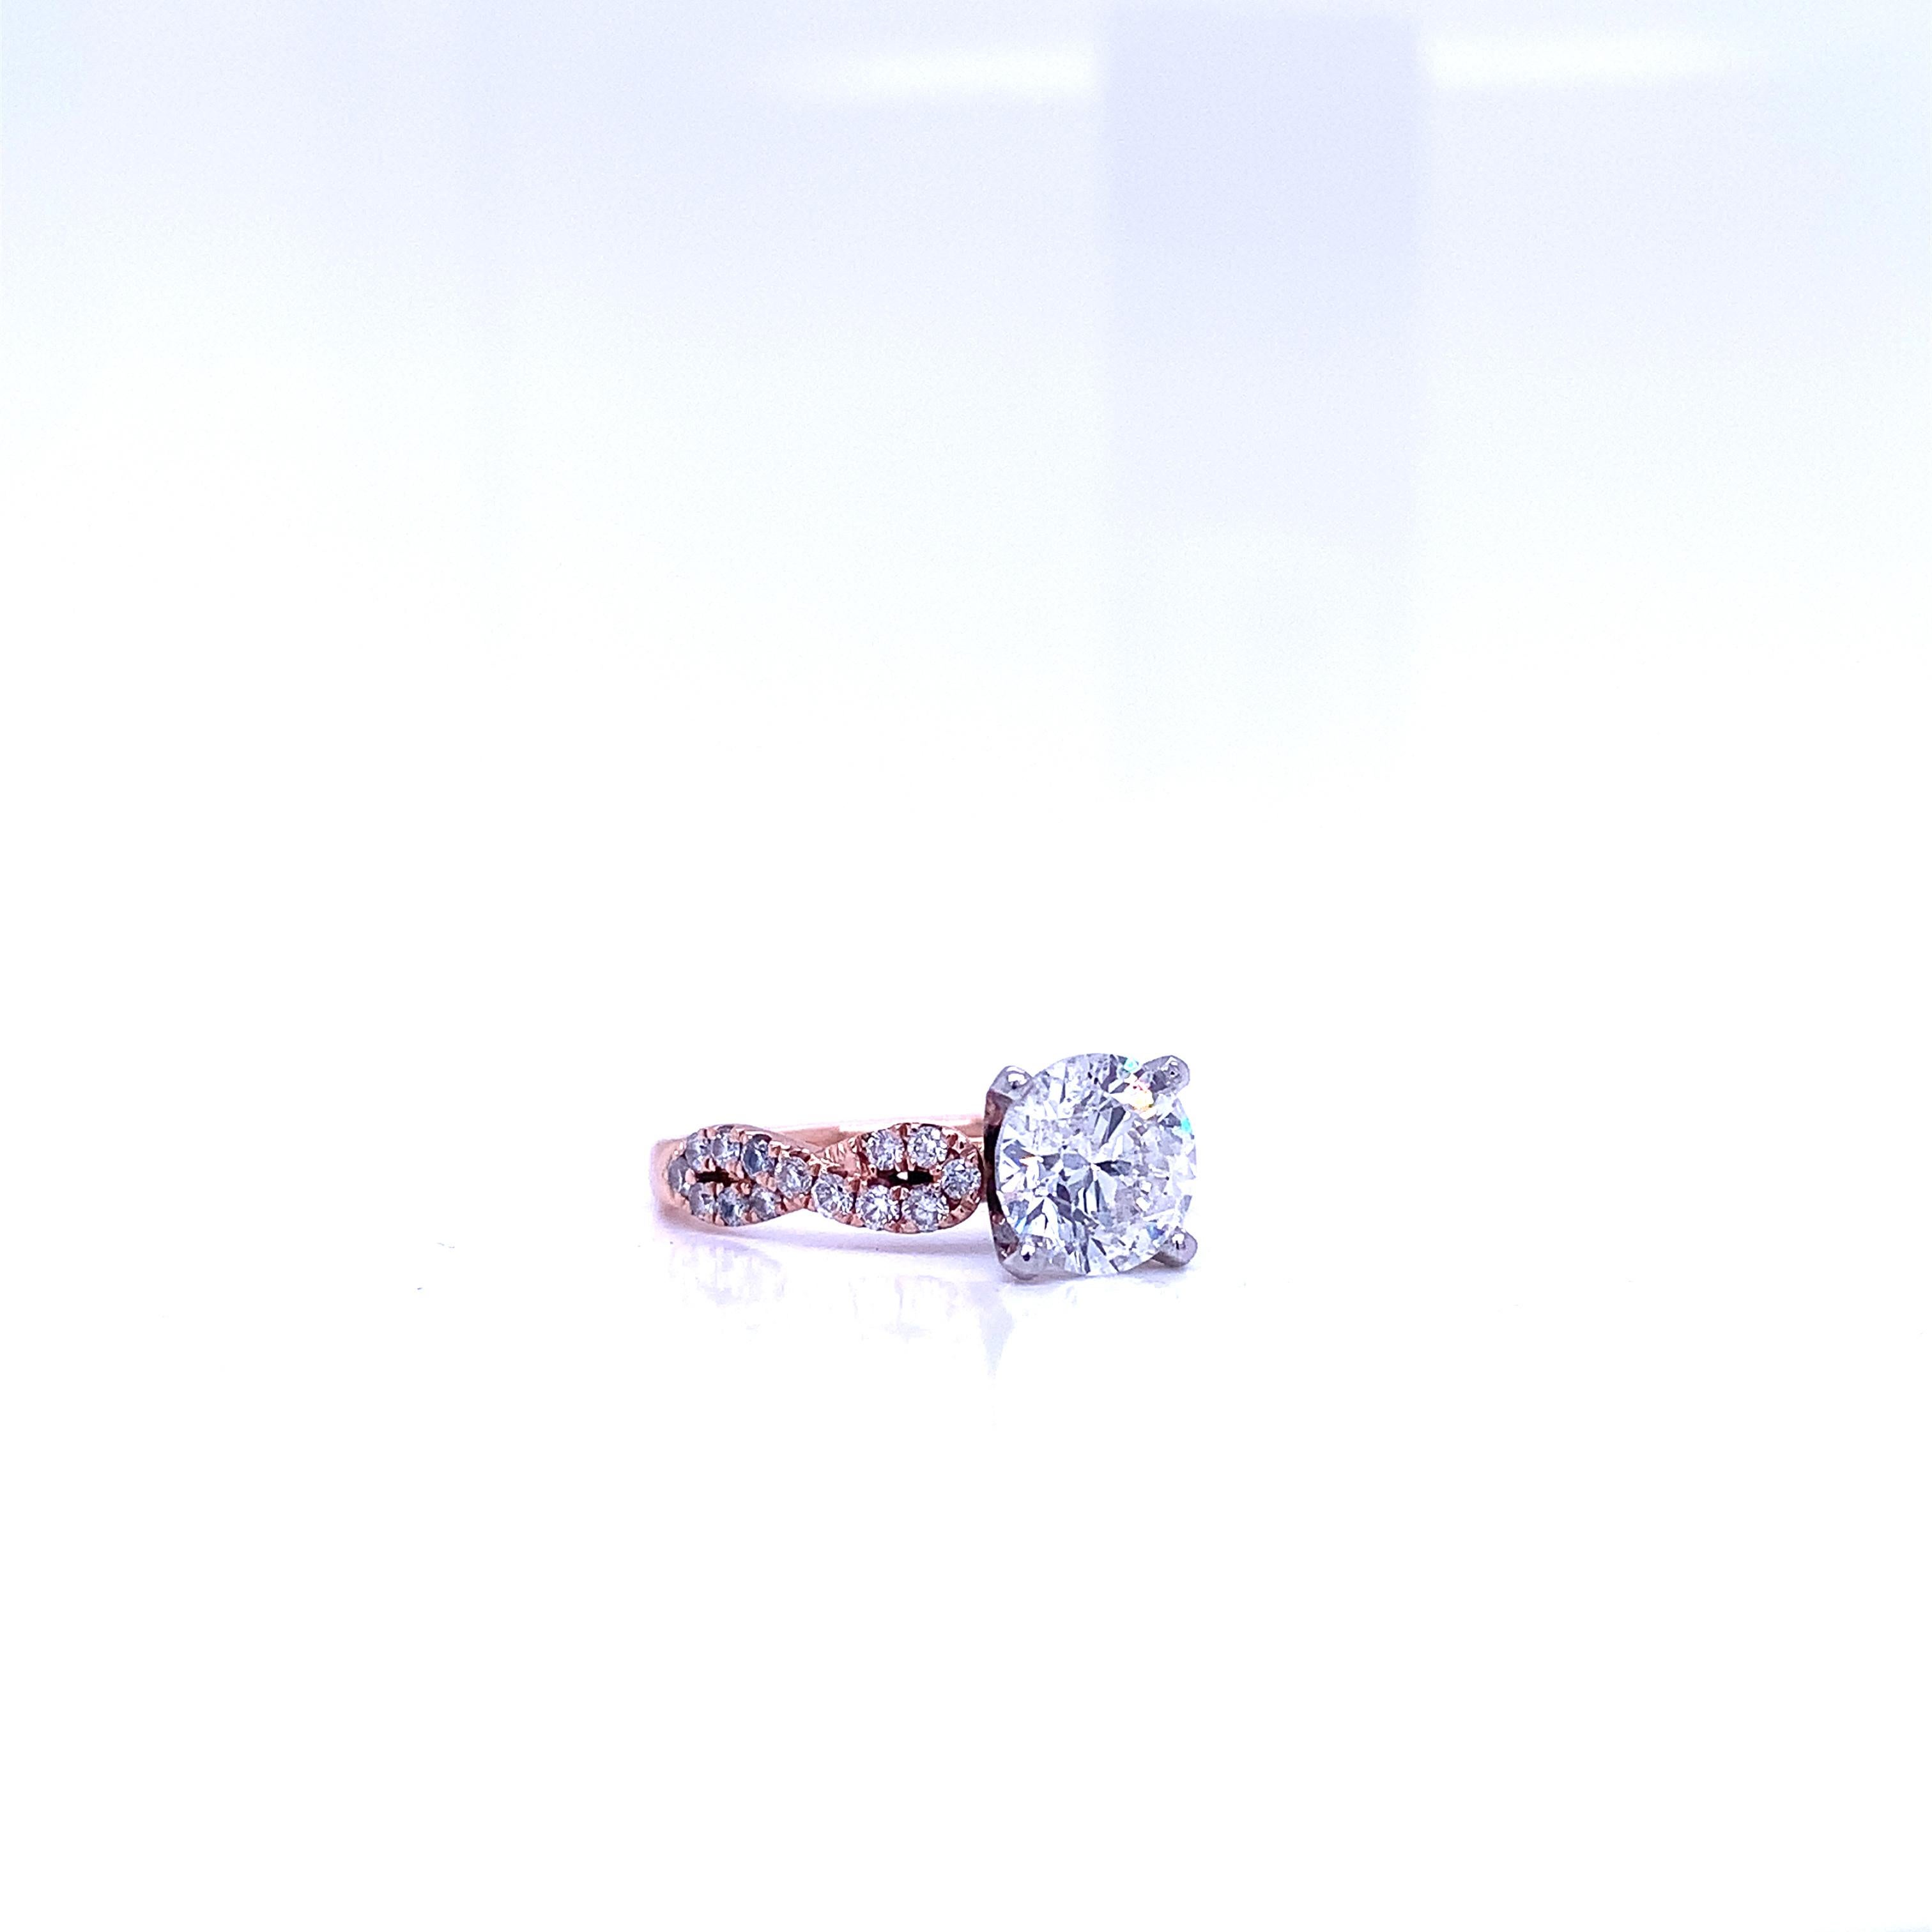 Round Cut Diamond 2.08 Carat Ring Set in 14k Rose Gold For Sale 2